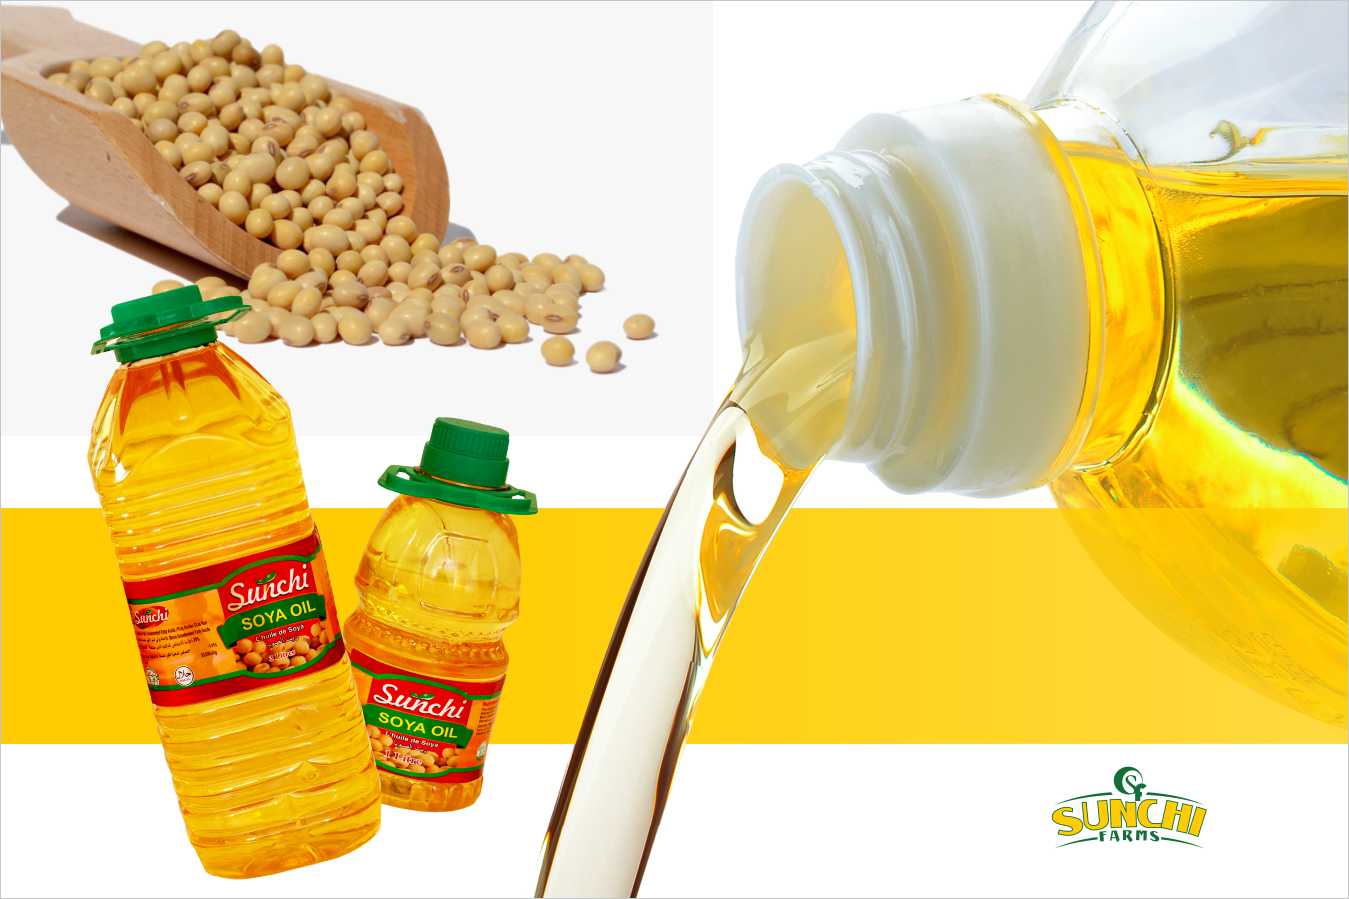 sunchi oil